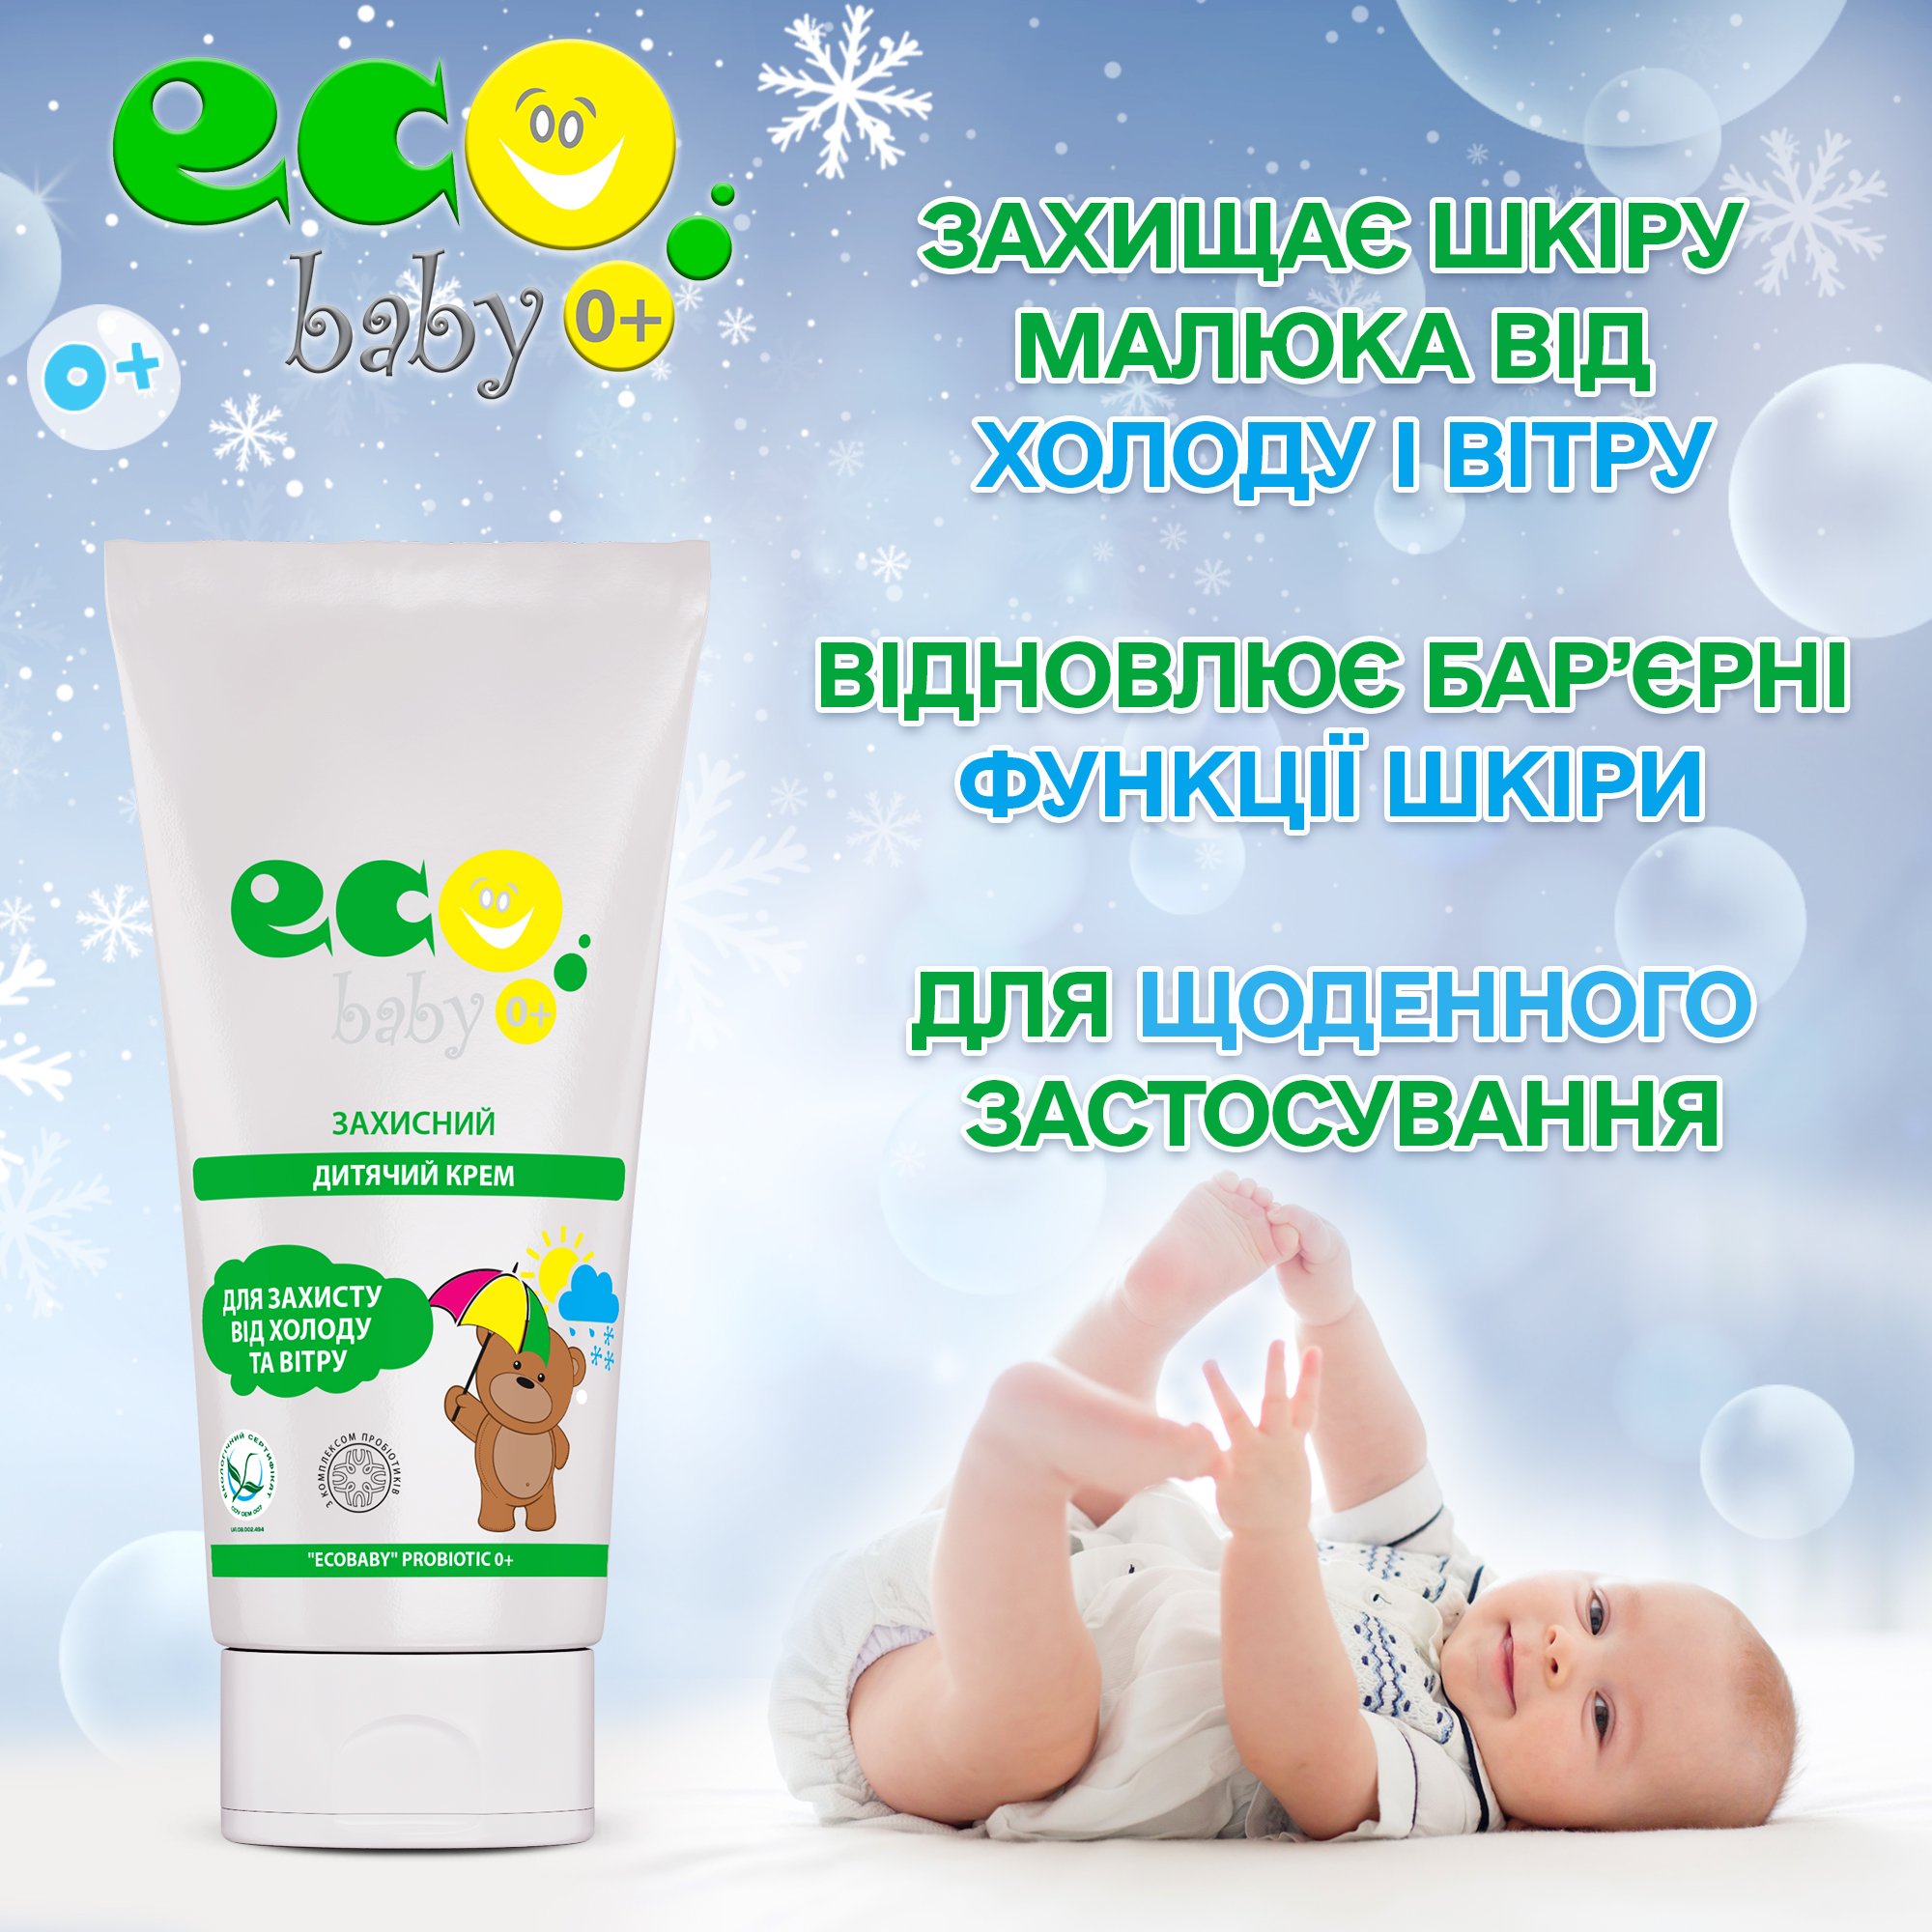 Захисний дитячий крем EcoBaby Prpbiotic 0+, 90 мл - фото 2